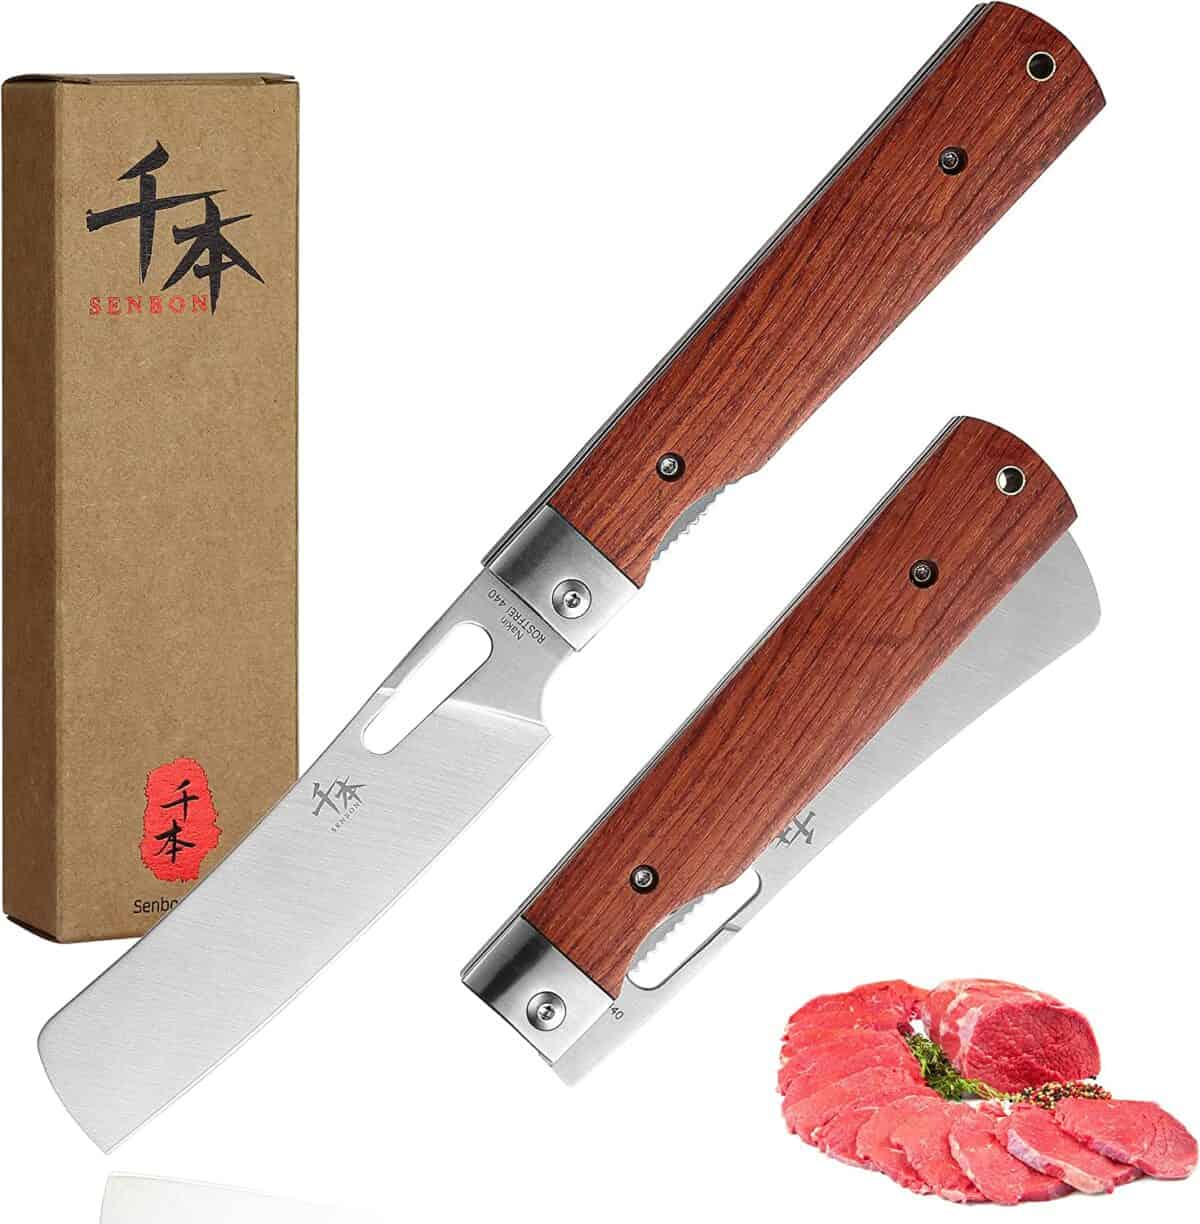 SENBON 440A Japanese pocket knife review